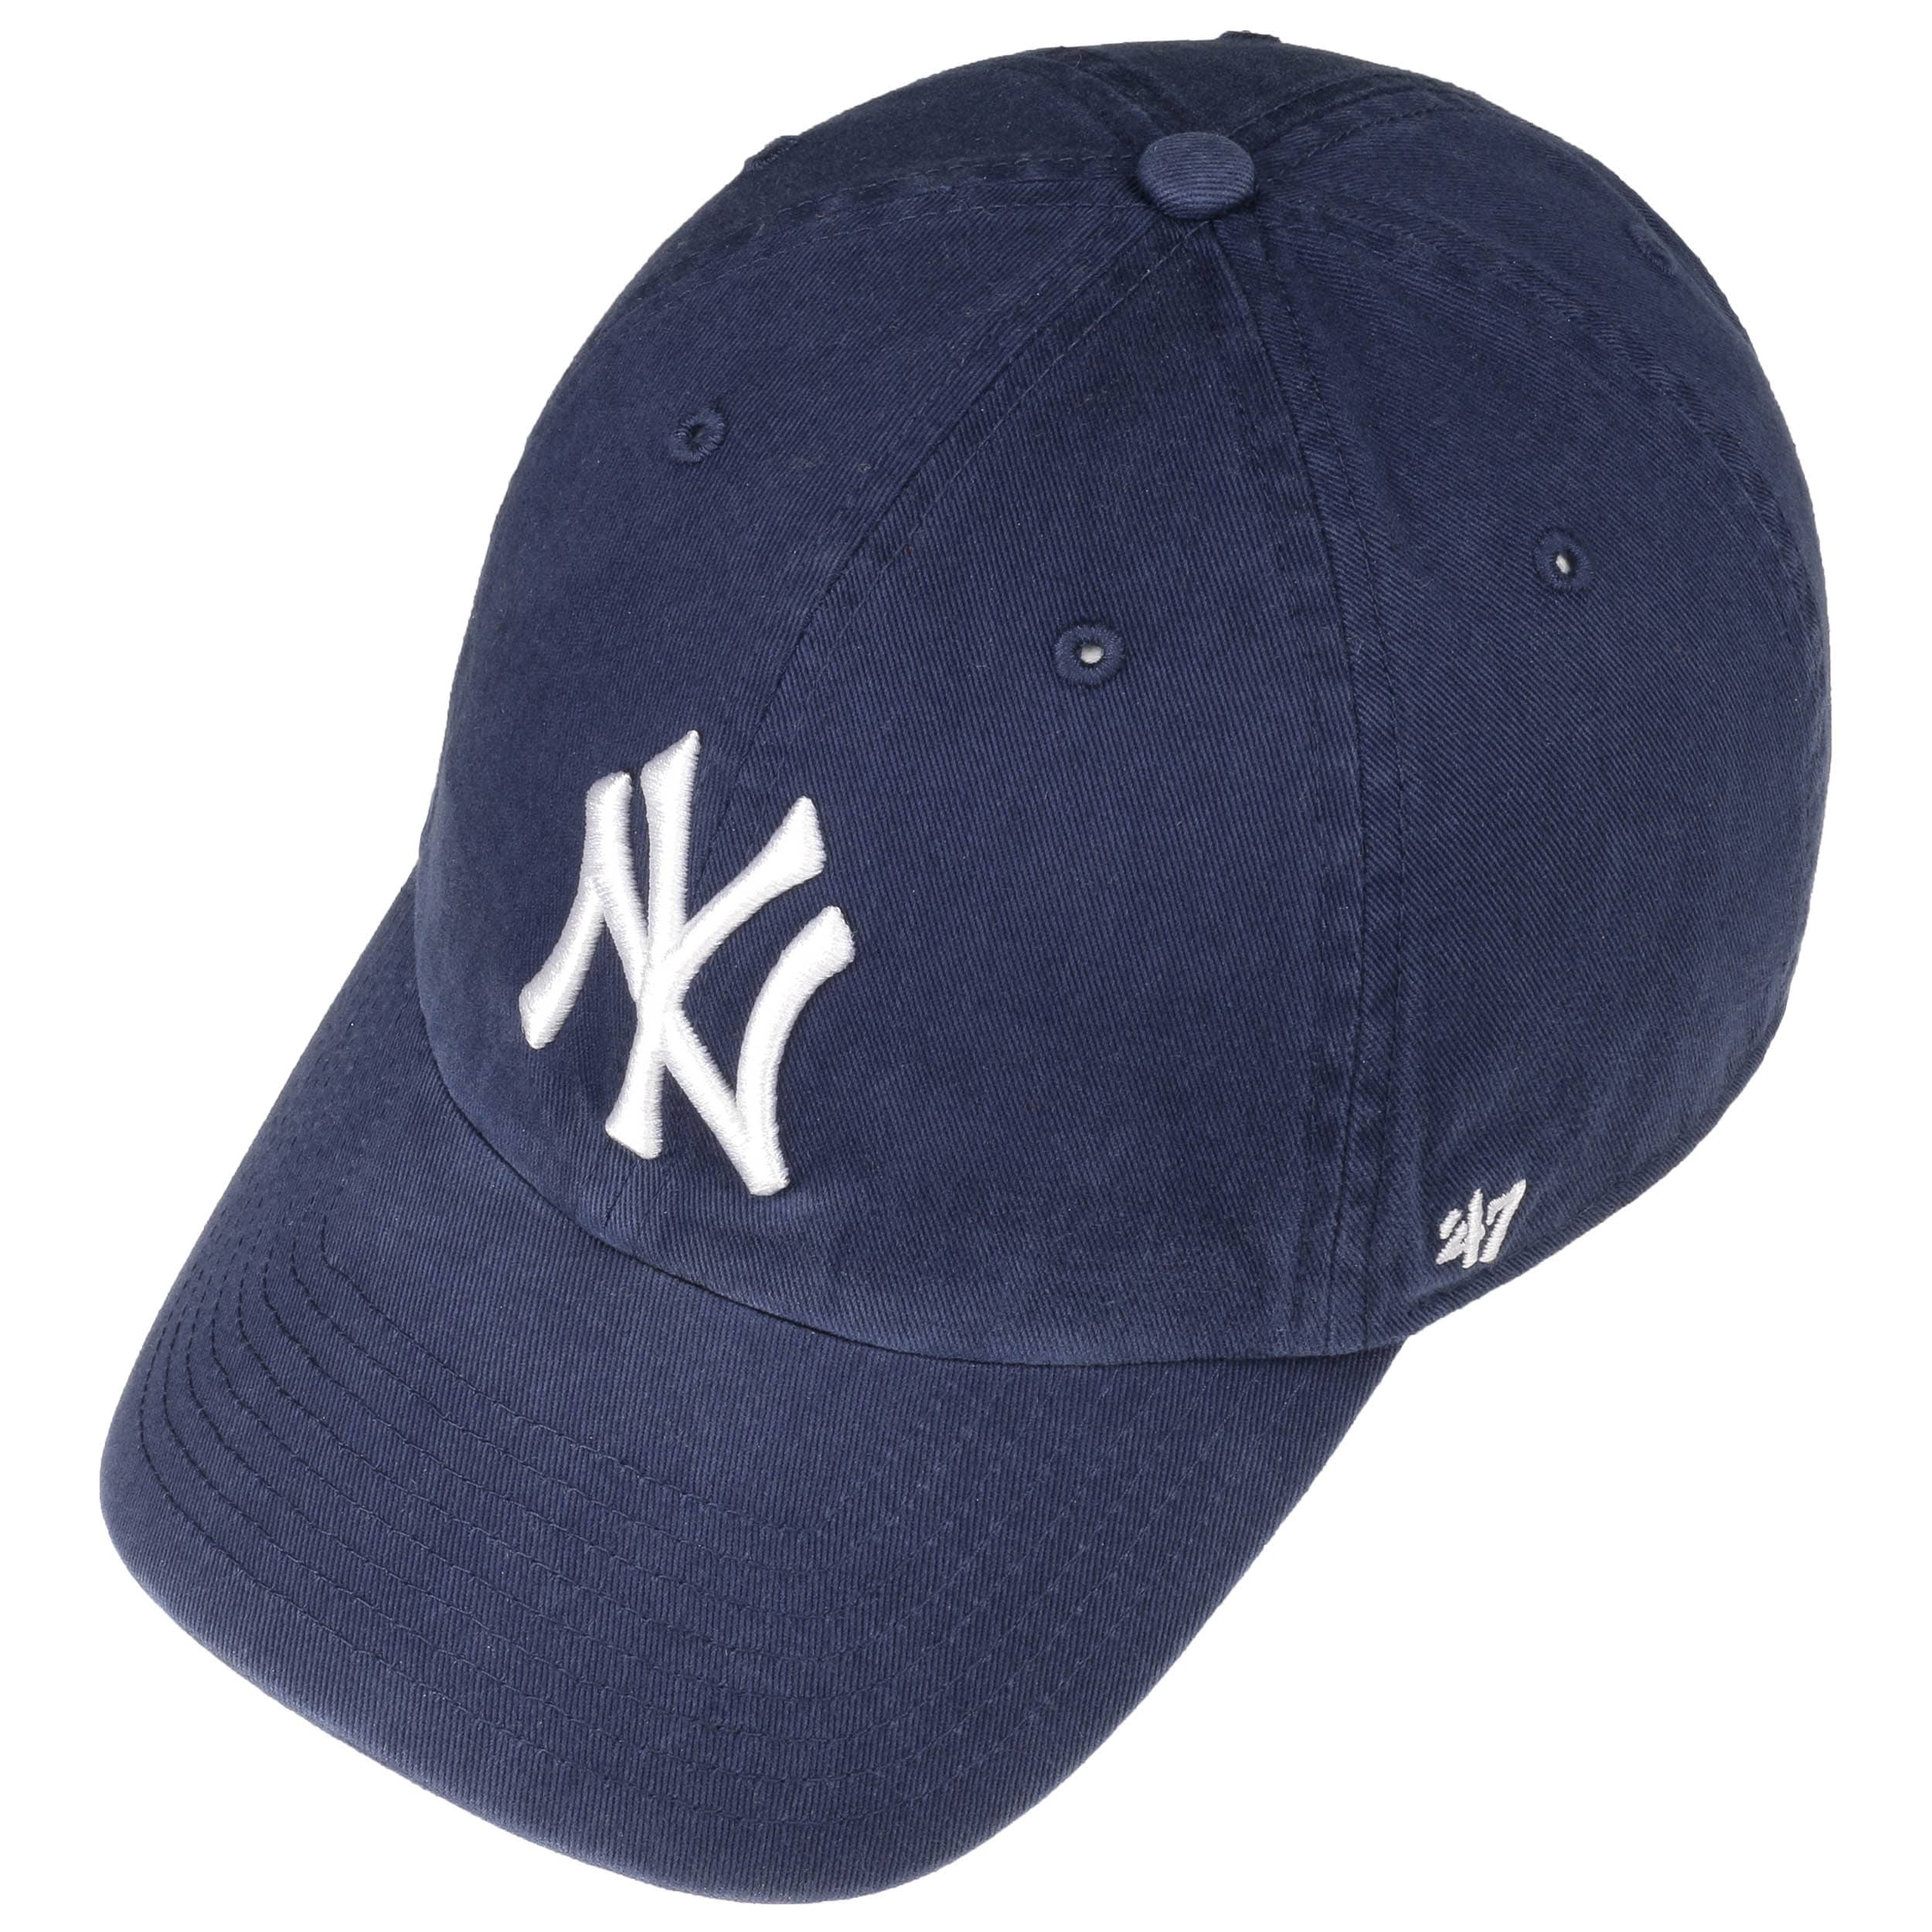 Urban Outfitters New York Yankees Trucker Cap '47 Snapback Hat Wine Re -  beyond exchange